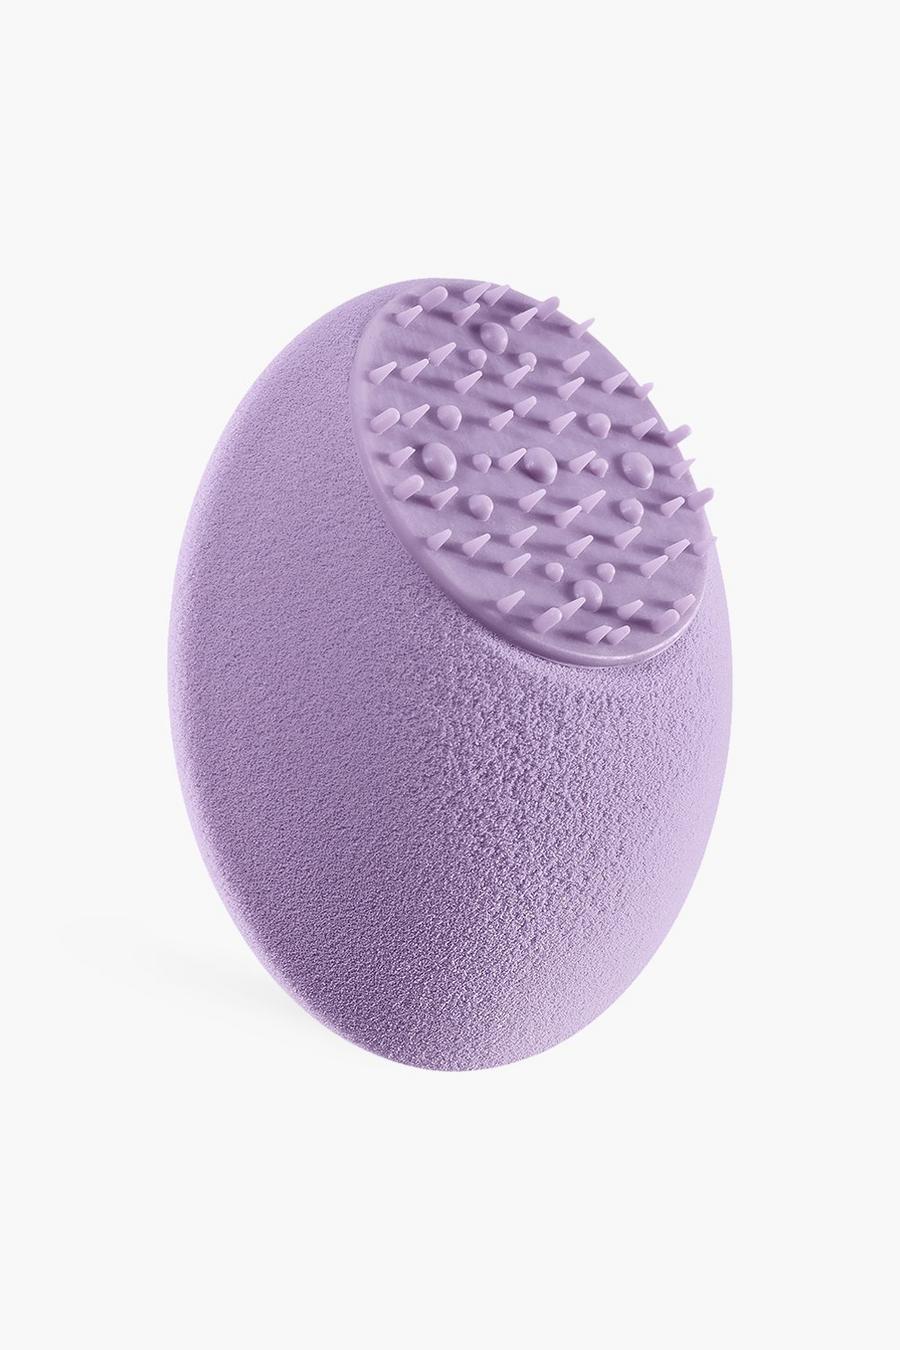 Esponja facial Miracle + esponja de Real Techniques, Lilac purple image number 1